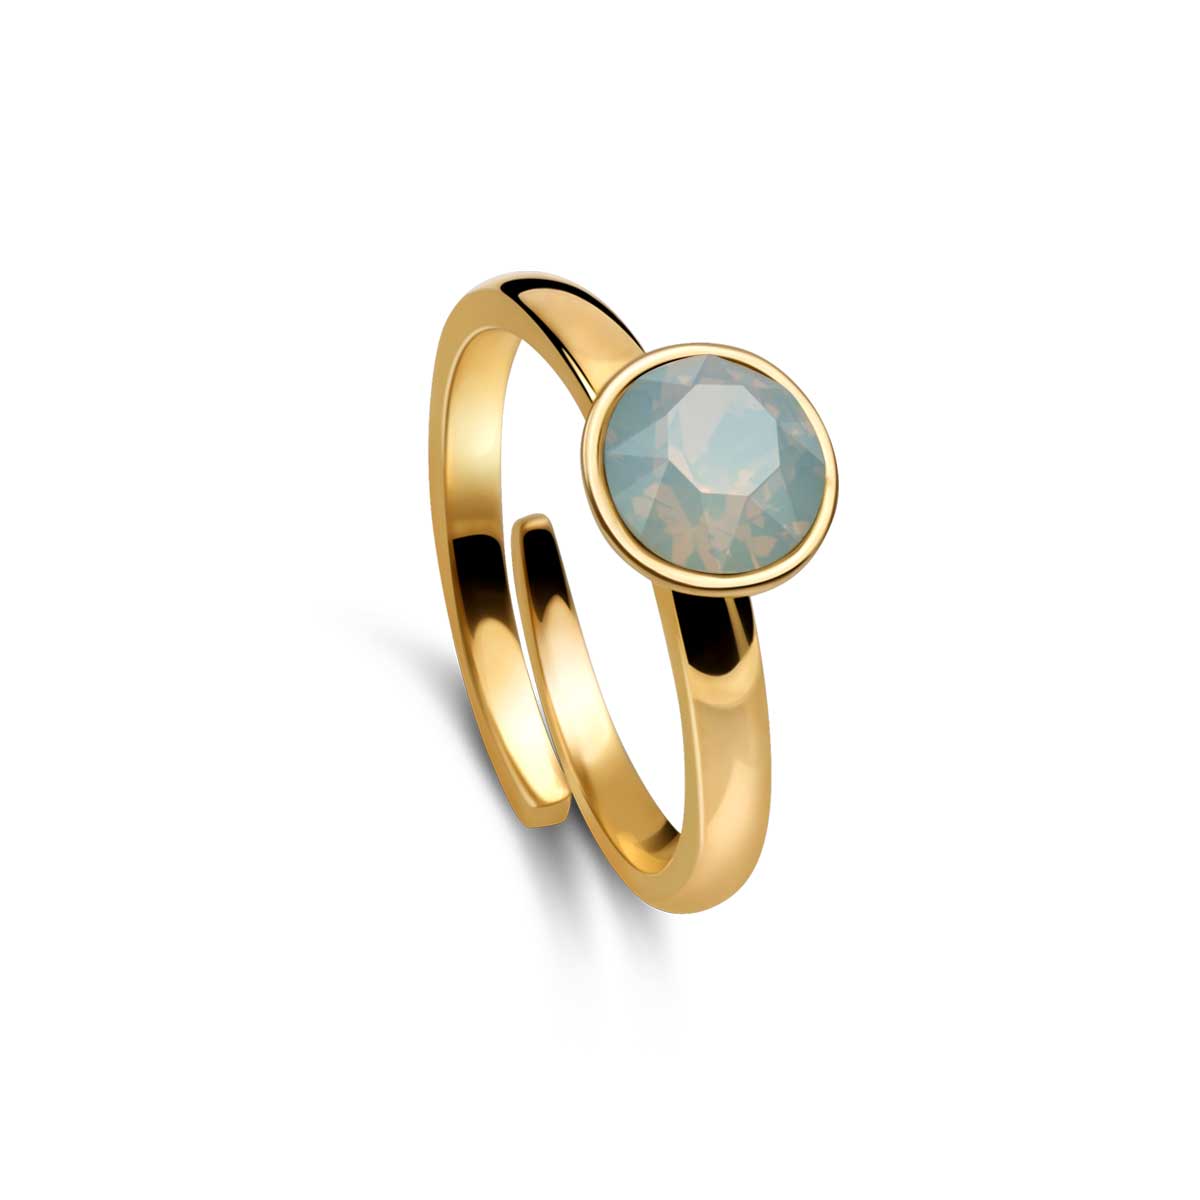 Ring 925 Silber Kristall opal verstellbar#oberflache_vergoldet